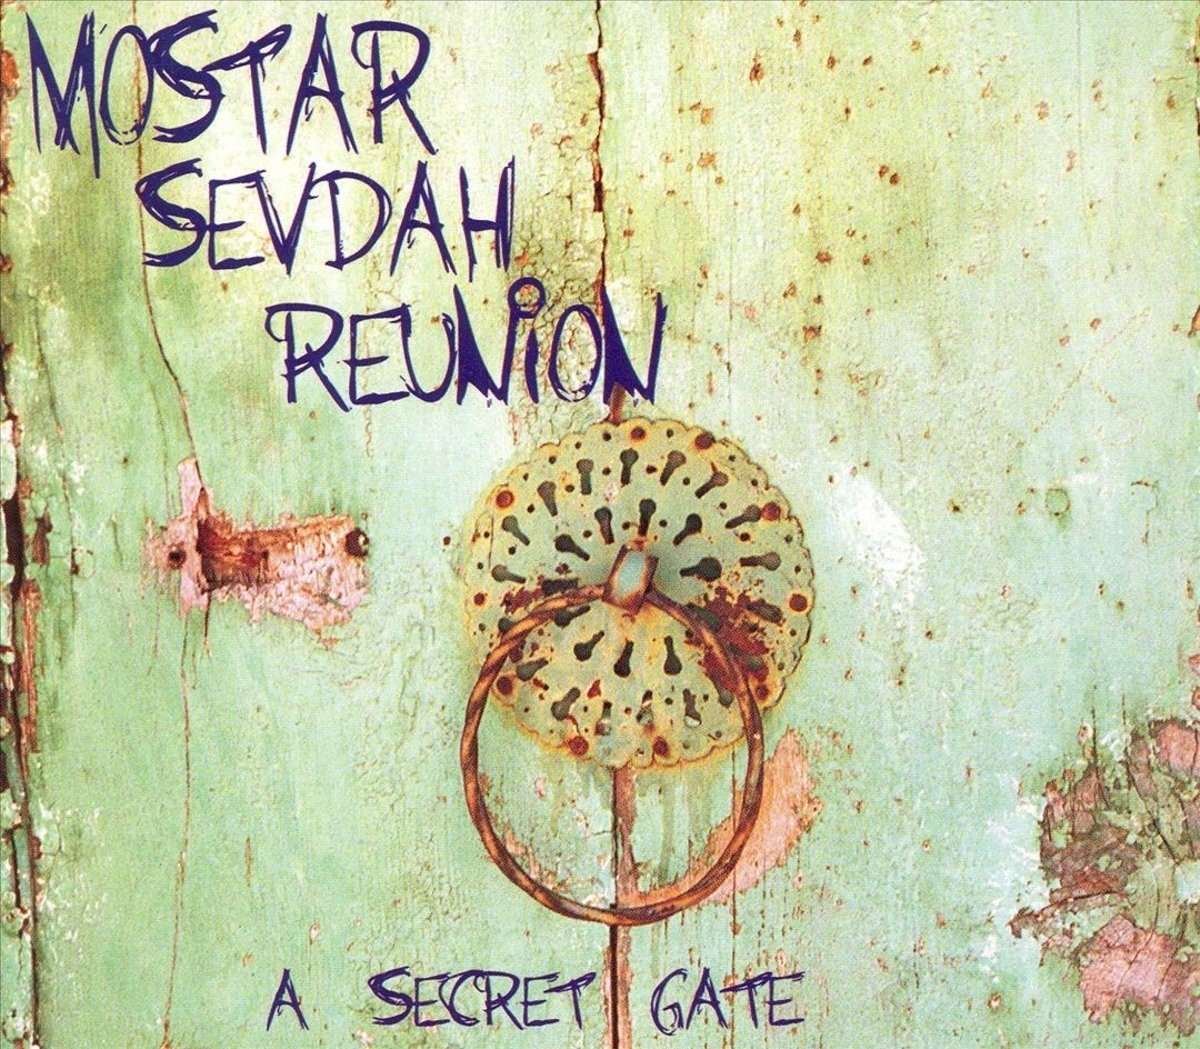 Mostar Sevdah Reunion - A Secret Gate (CD) - Mostar Sevdah Reunion